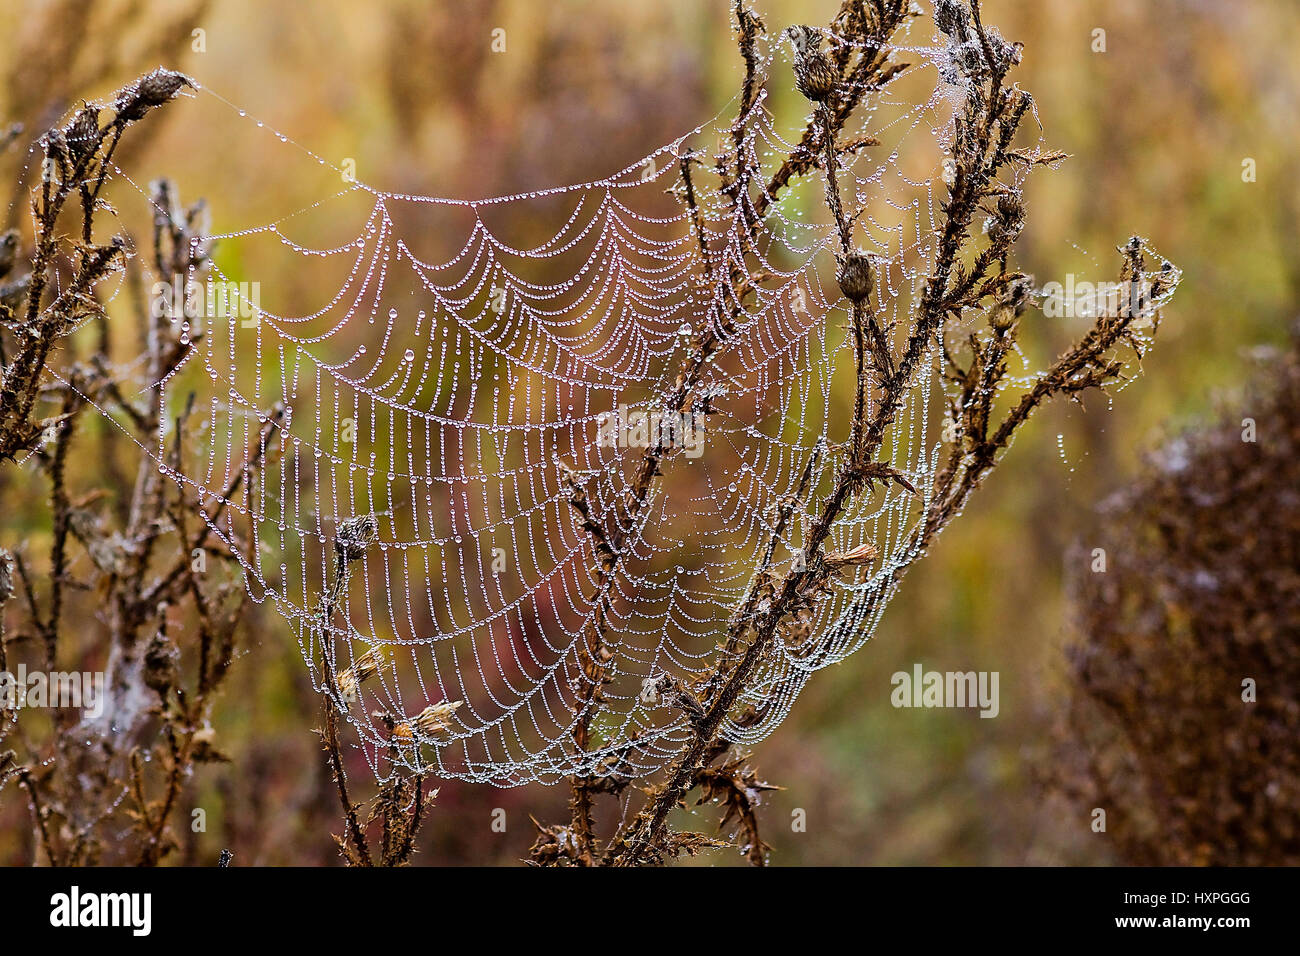 Dewdrops hang in the spider net in the morning , Tautropfen haengen im Spinnennetz am Morgen Stock Photo